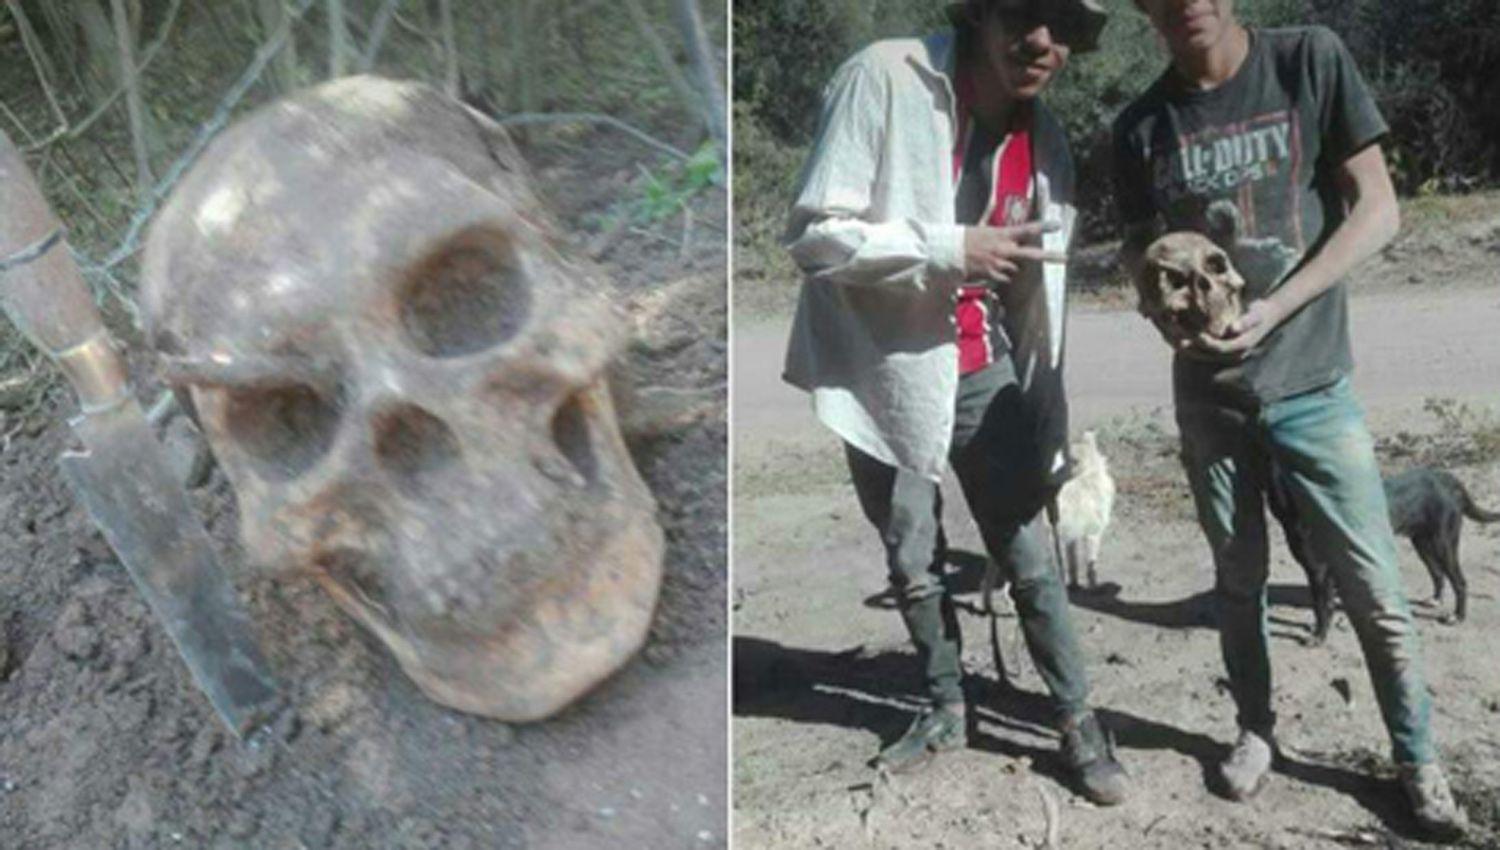 Dos joacutevenes descubrieron un esqueleto humano enterrado